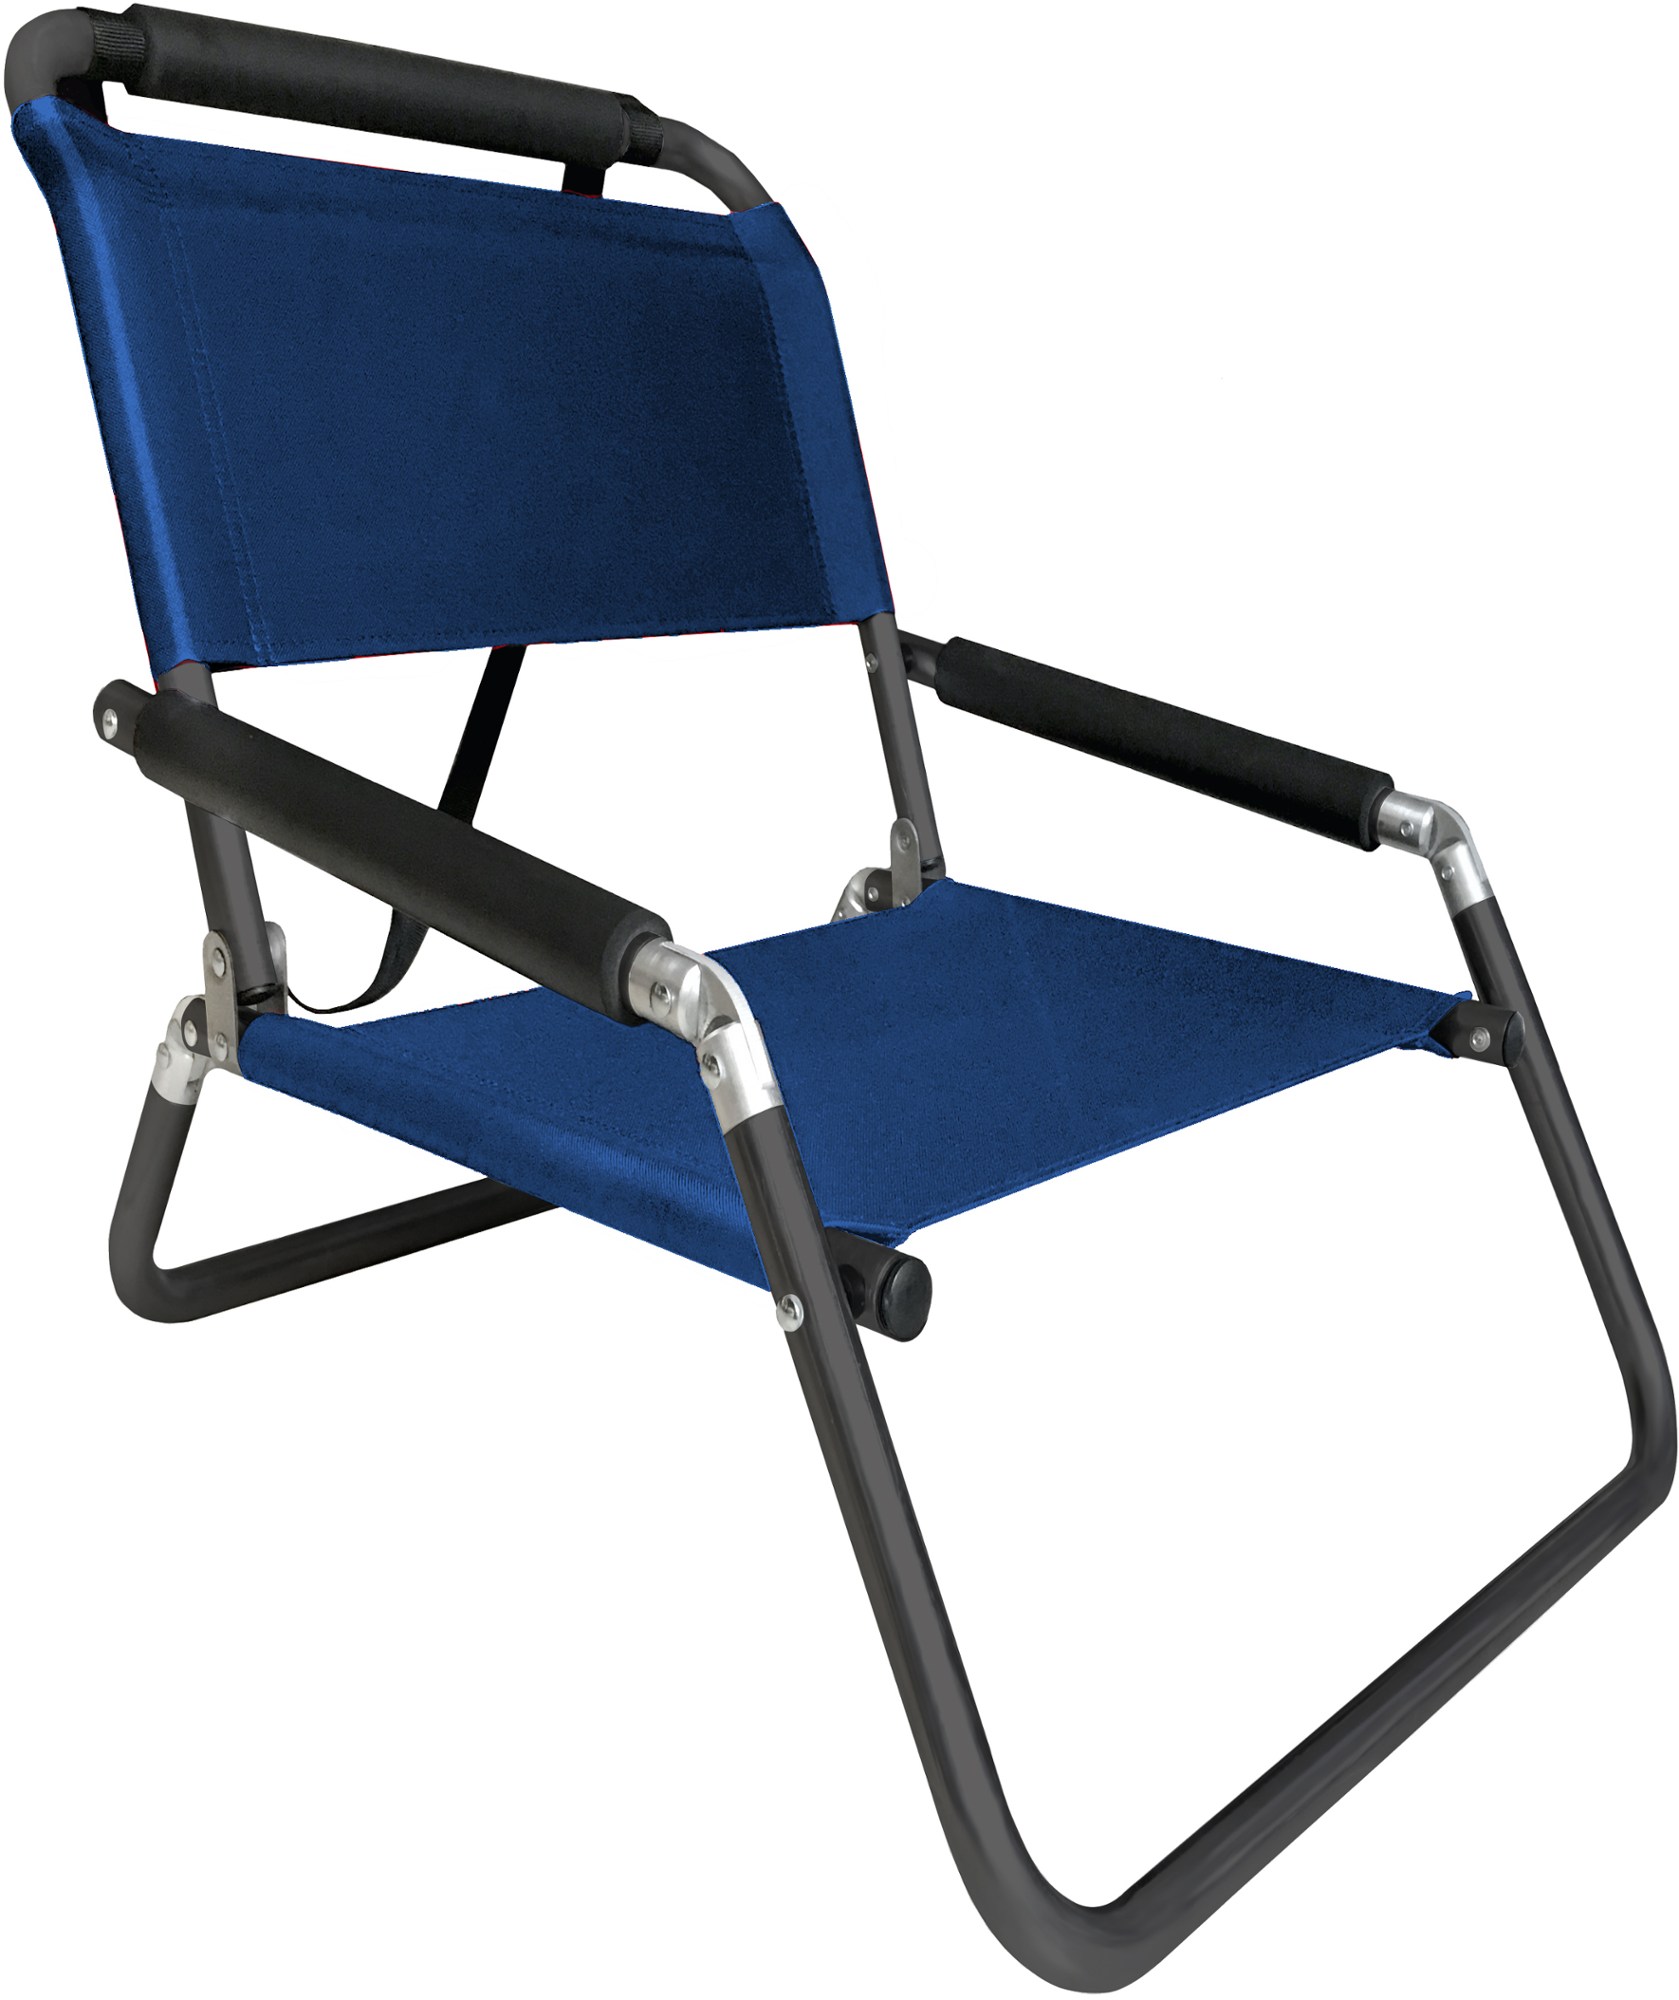 Пляжный стул XL Neso, синий beach chair cover microfiber lounge chair towel rack beach mat holiday camping leisure recliner backrest colorful pool chaise